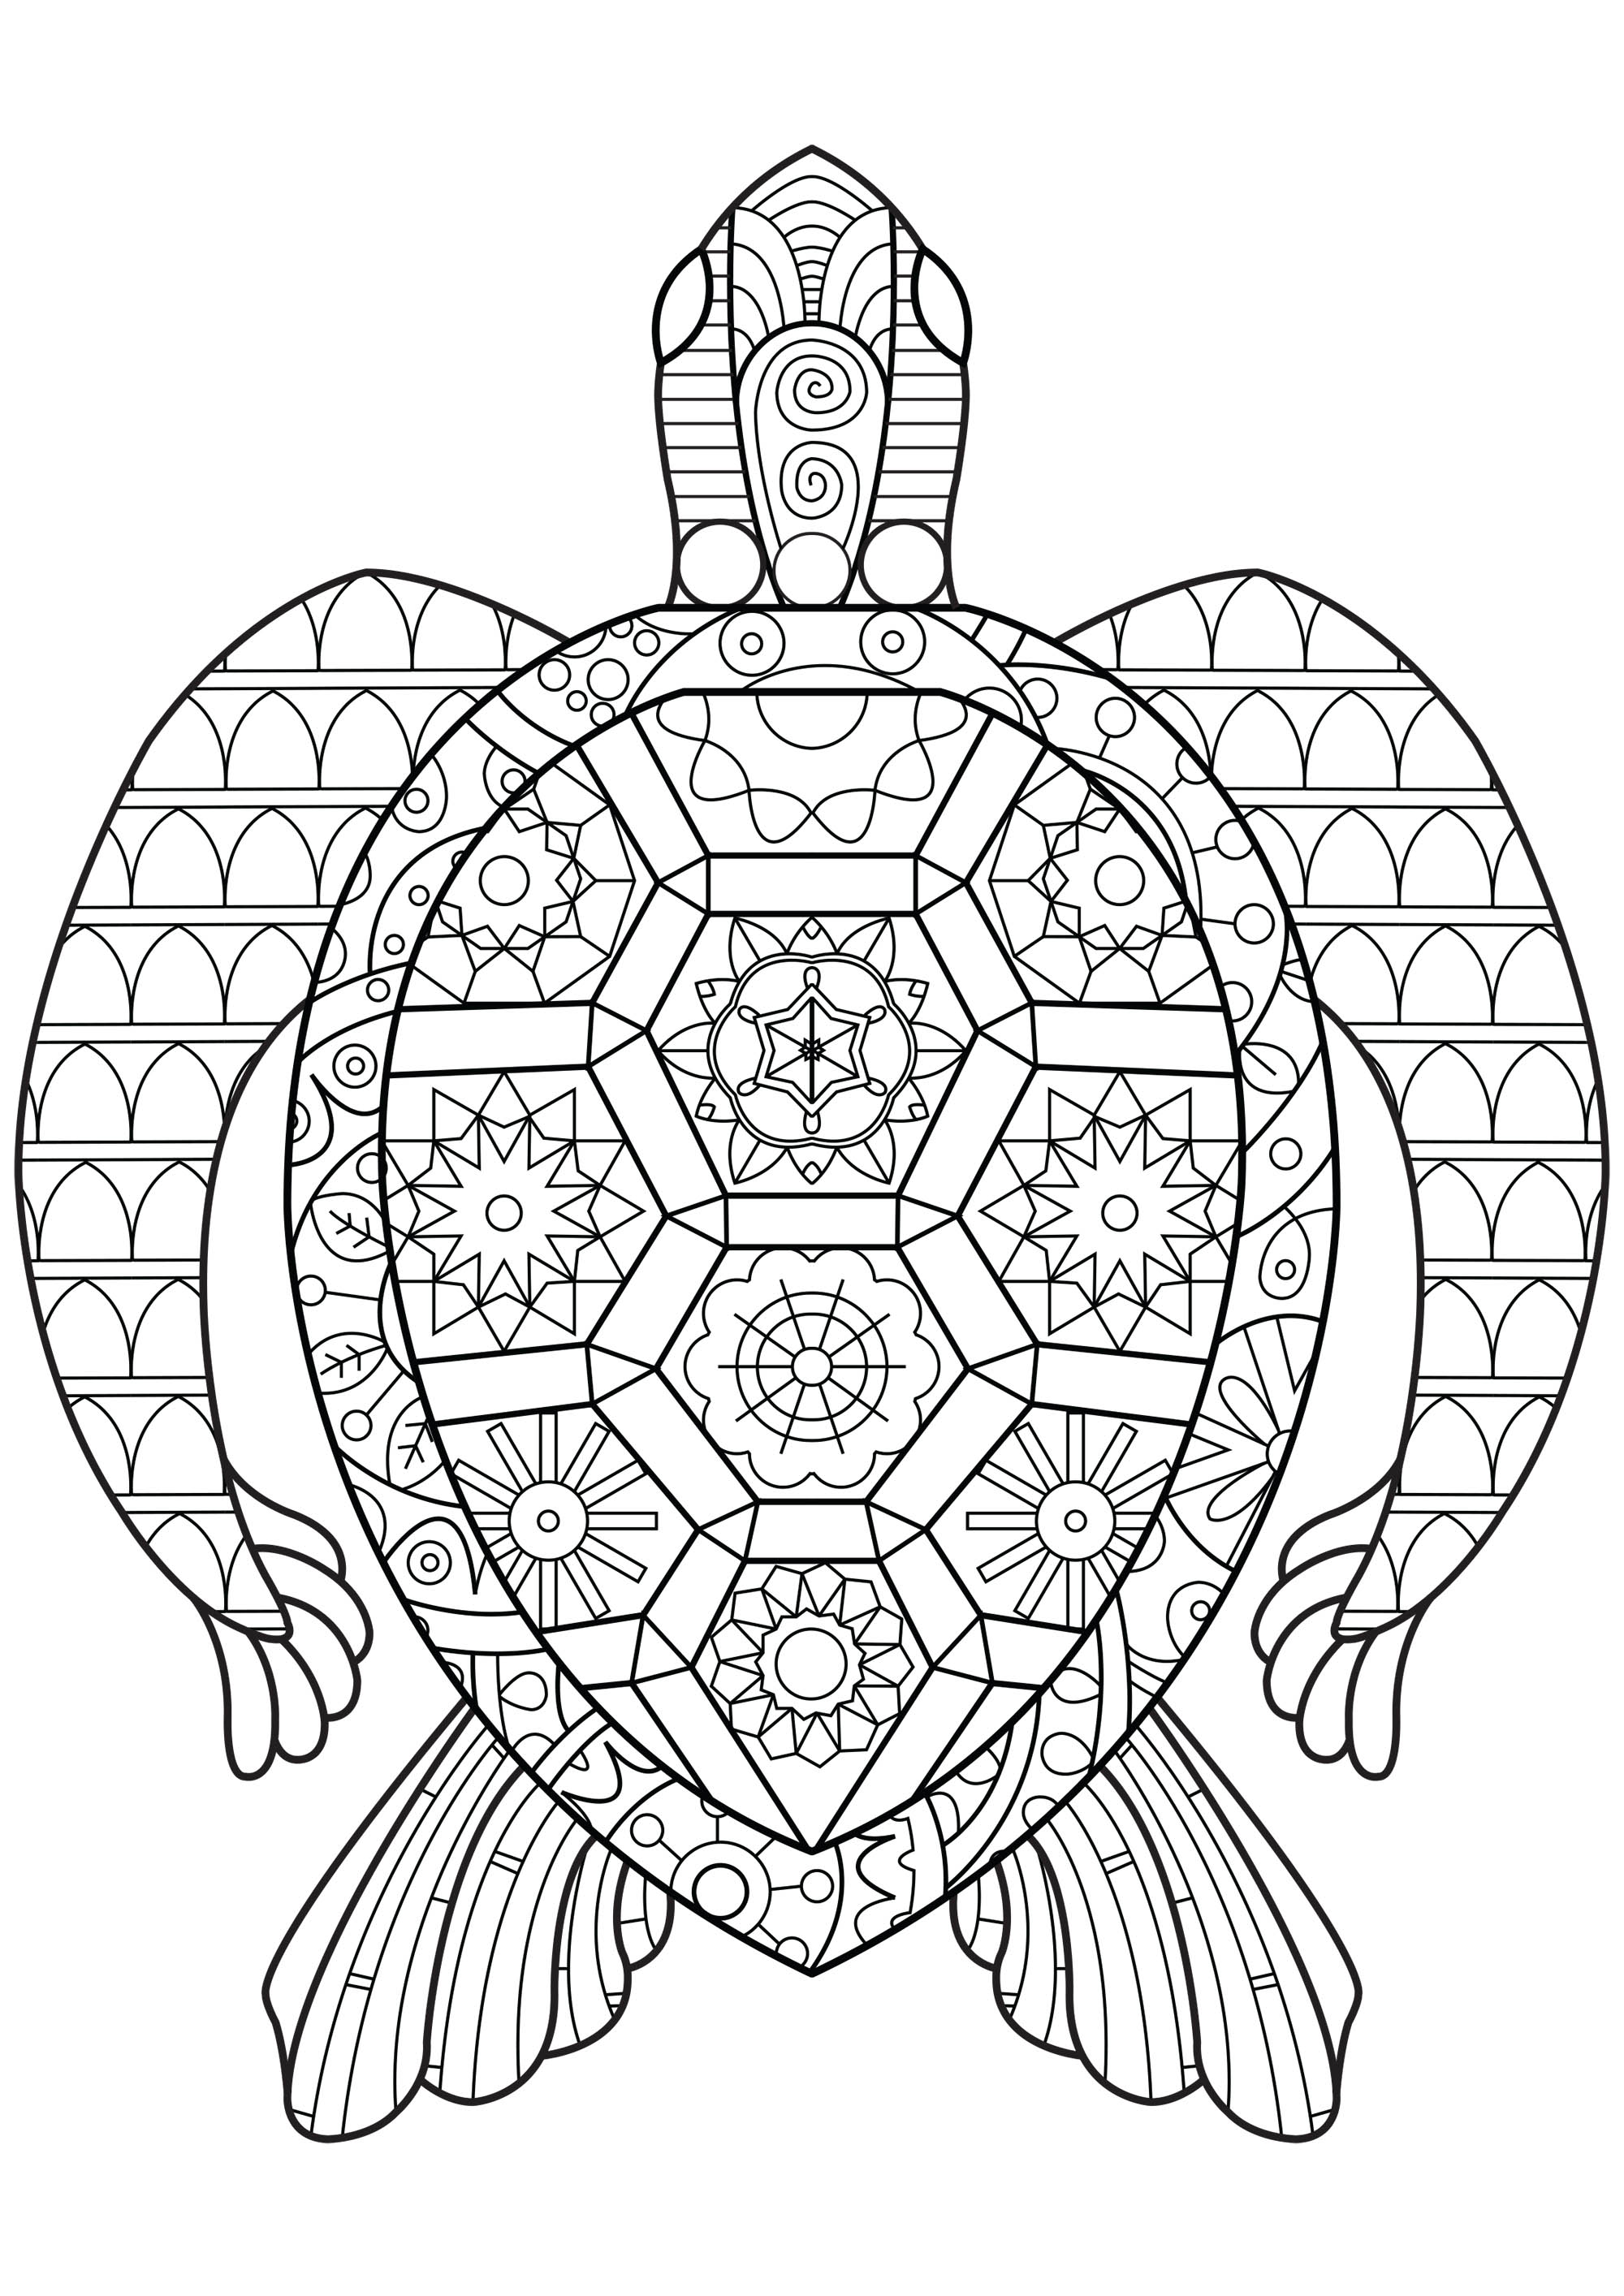 Tartaruga composta por formas geométricas